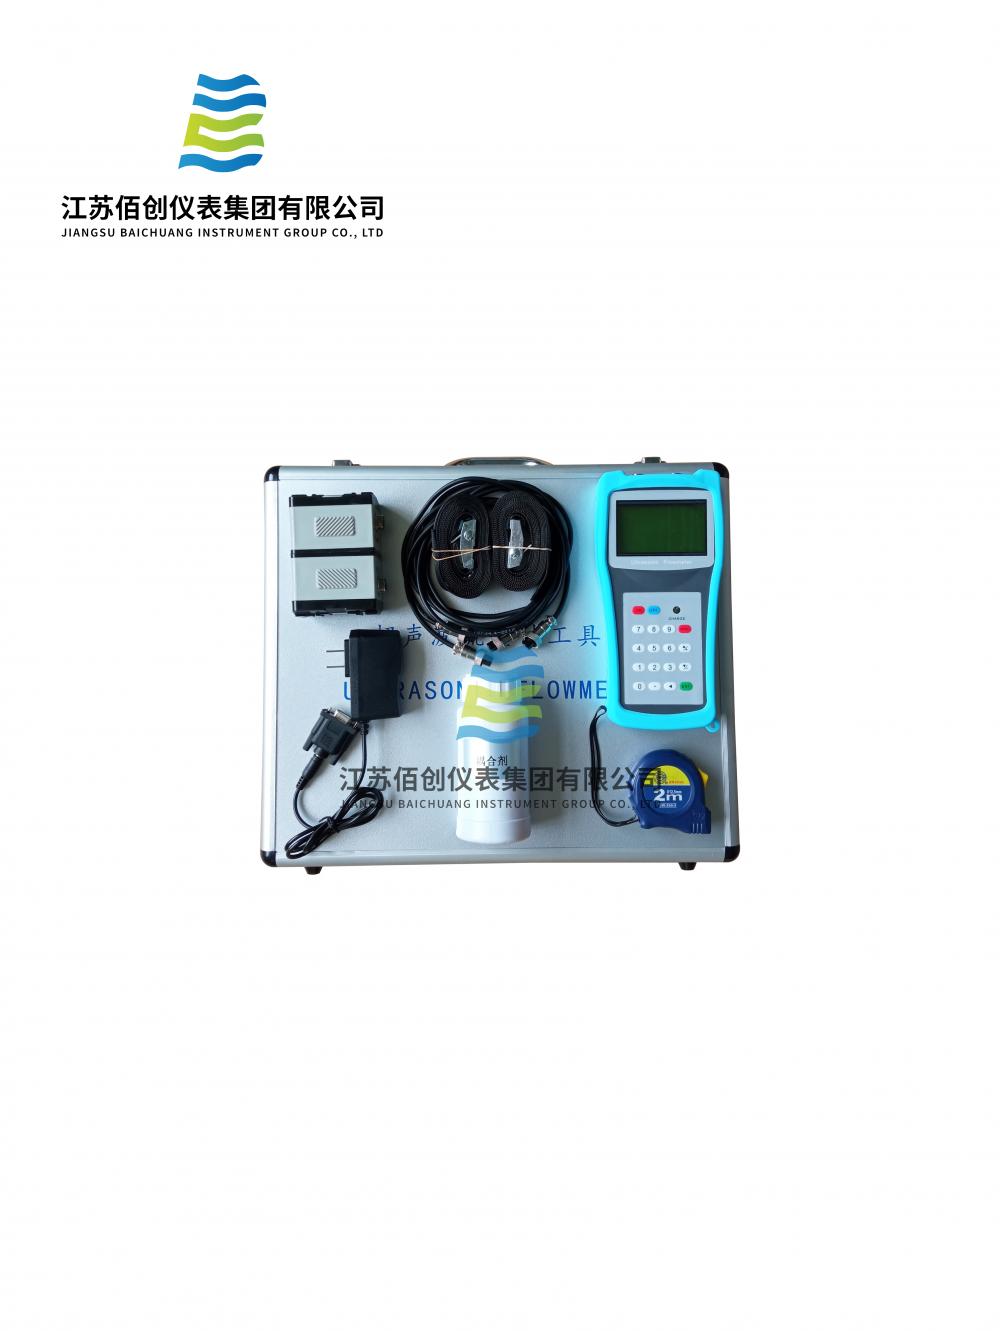 Industrial Handheld Ultrasonic Flowmeter Machine